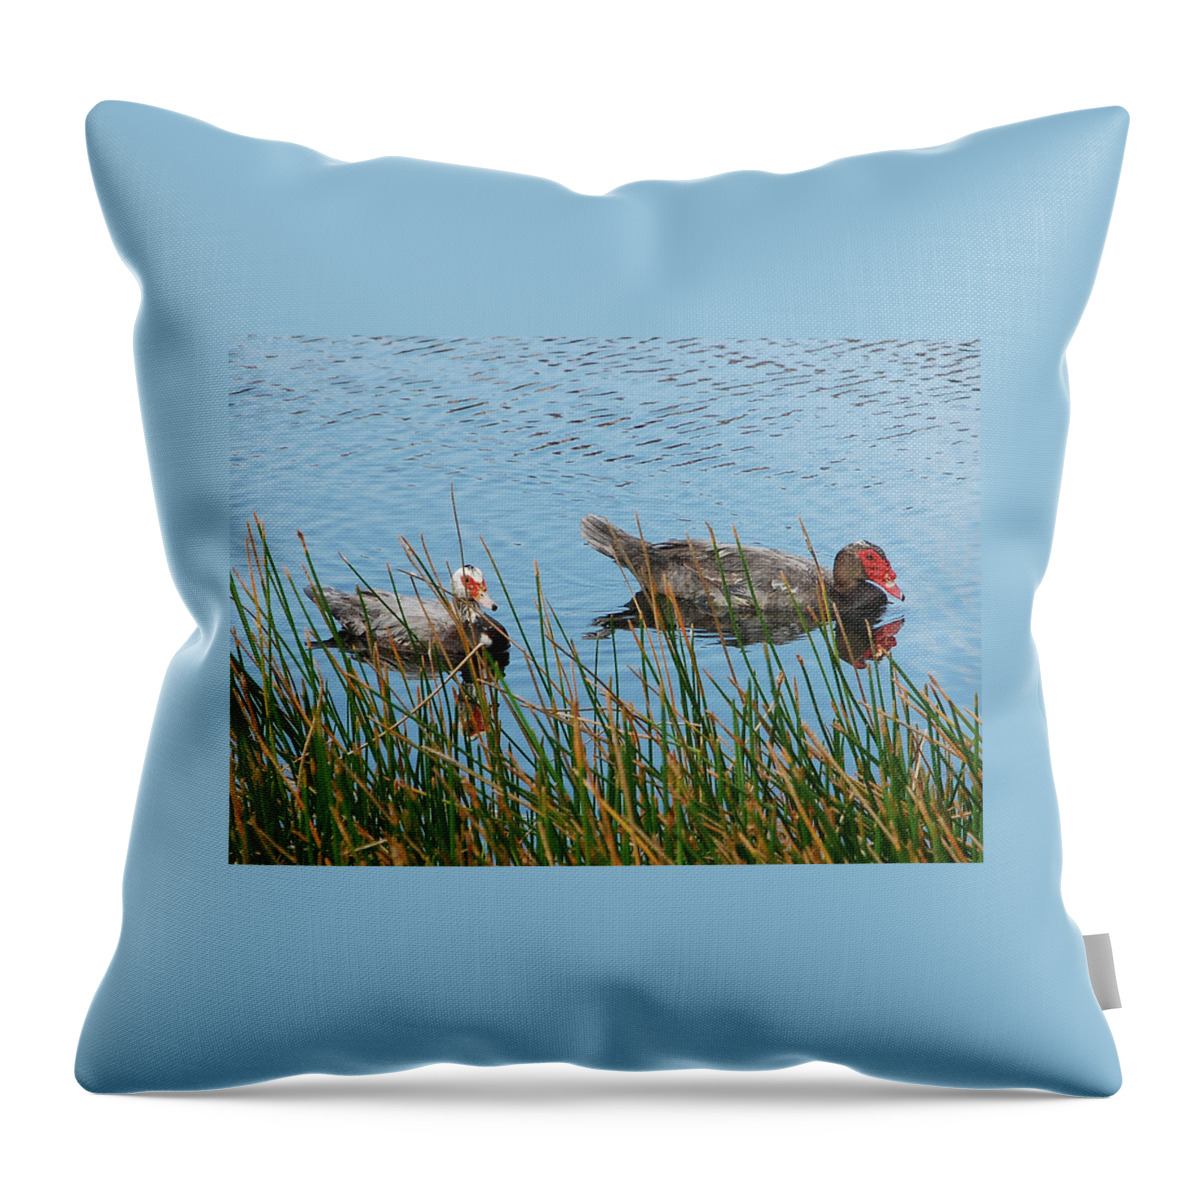 Ducks Throw Pillow featuring the photograph 2- Ducks by Joseph Keane